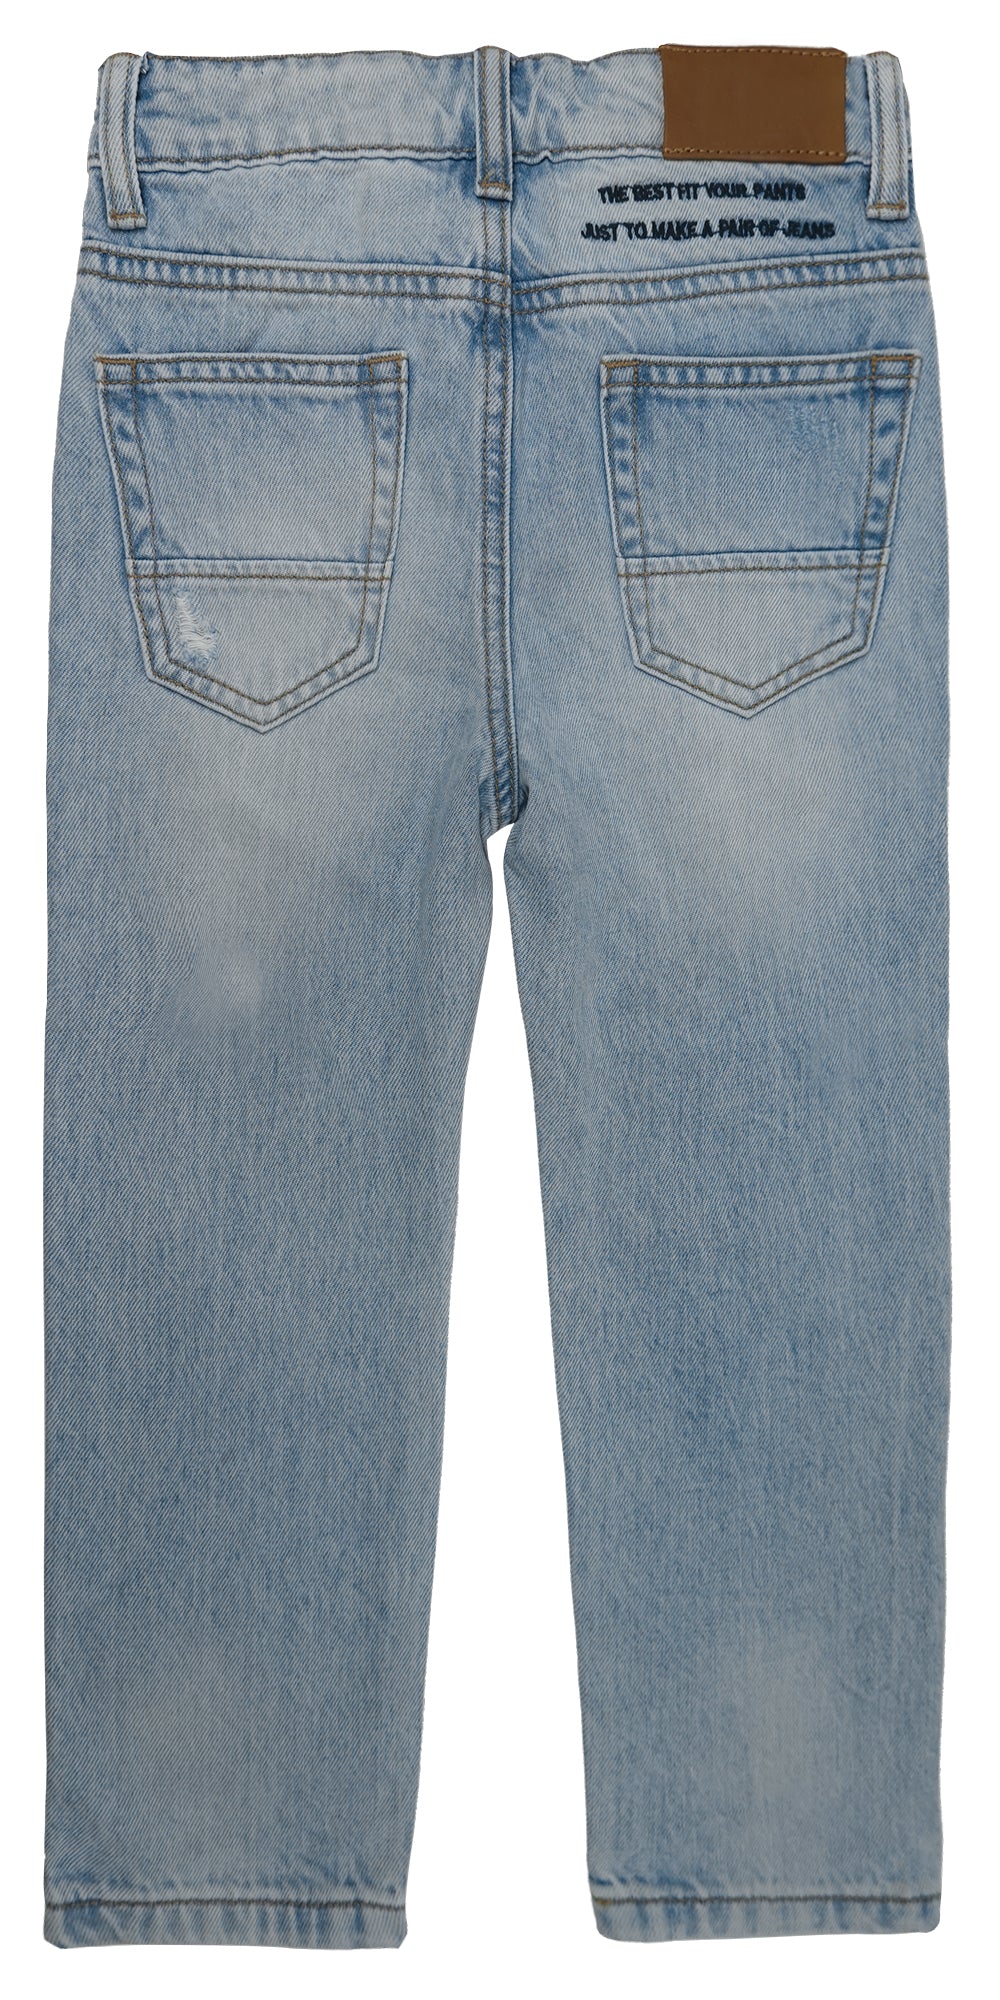 Womens jeans Karate pants Old Navy girls Size 5 Distressed Look MSRP $34.99  | eBay